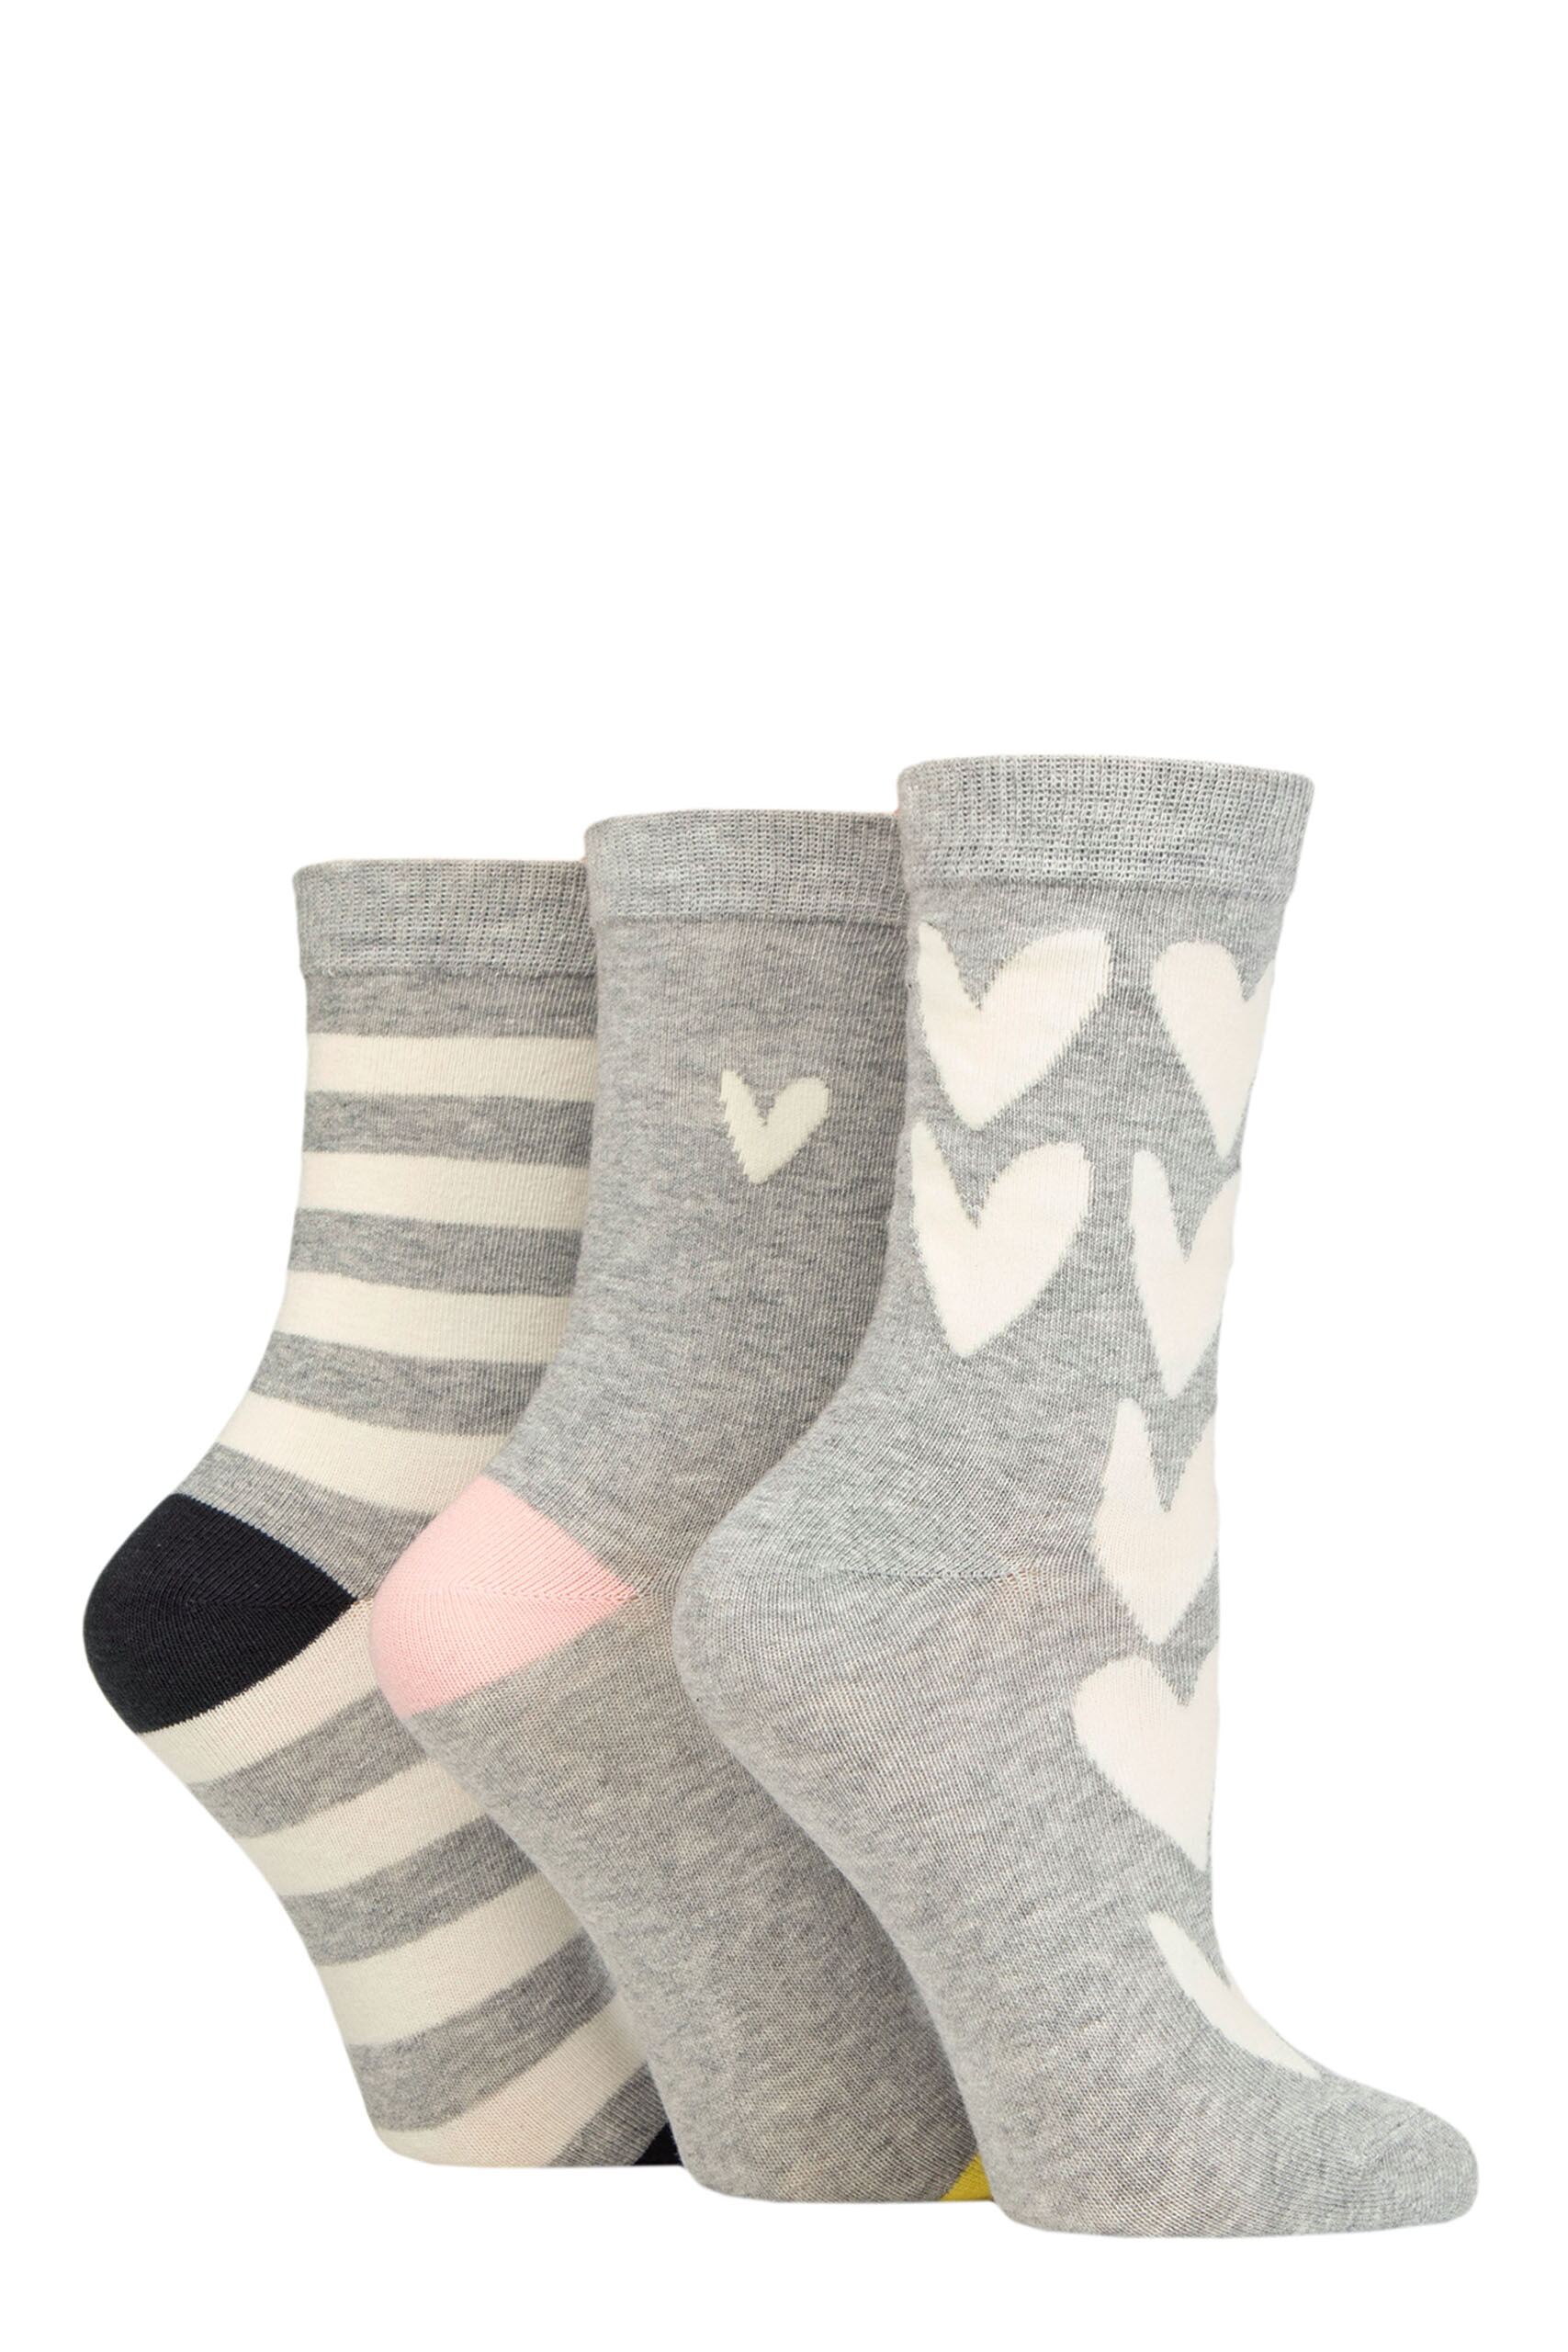 Ladies 3 Pair Caroline Gardner Patterned Cotton Socks All Over Hearts Light Grey UK 4-8